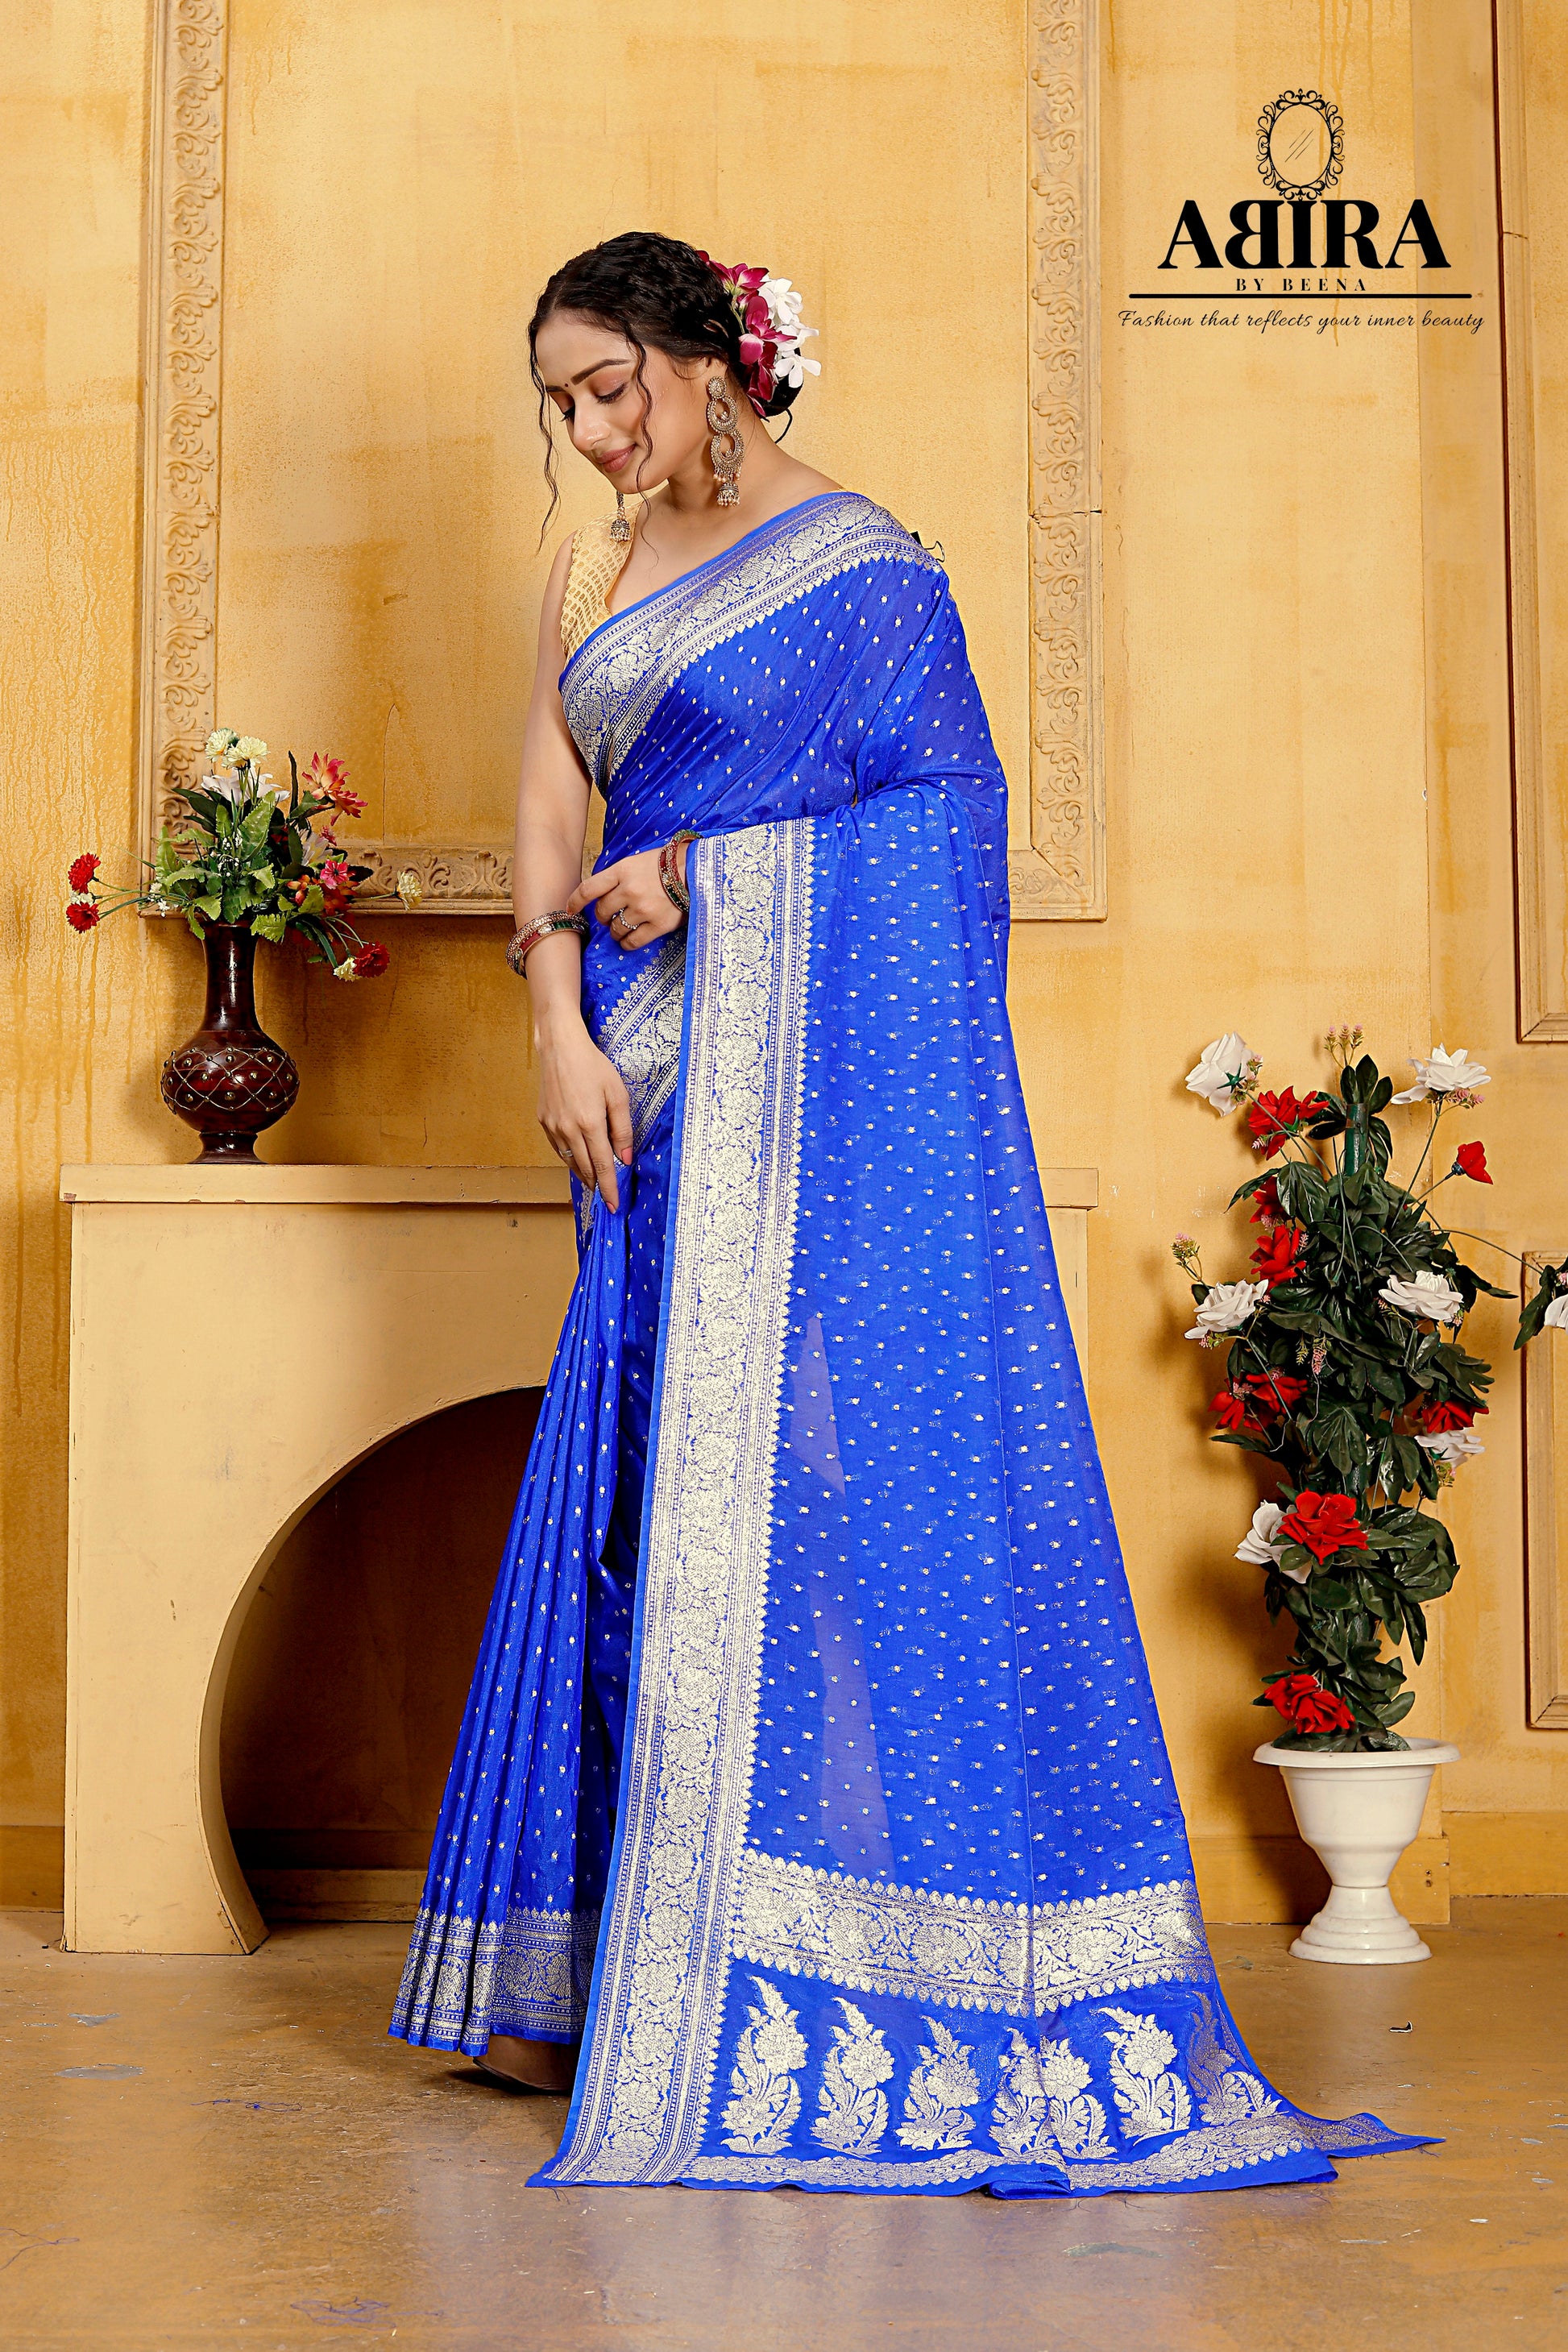 Blue Banaras Crepe silk - AbirabyBeena